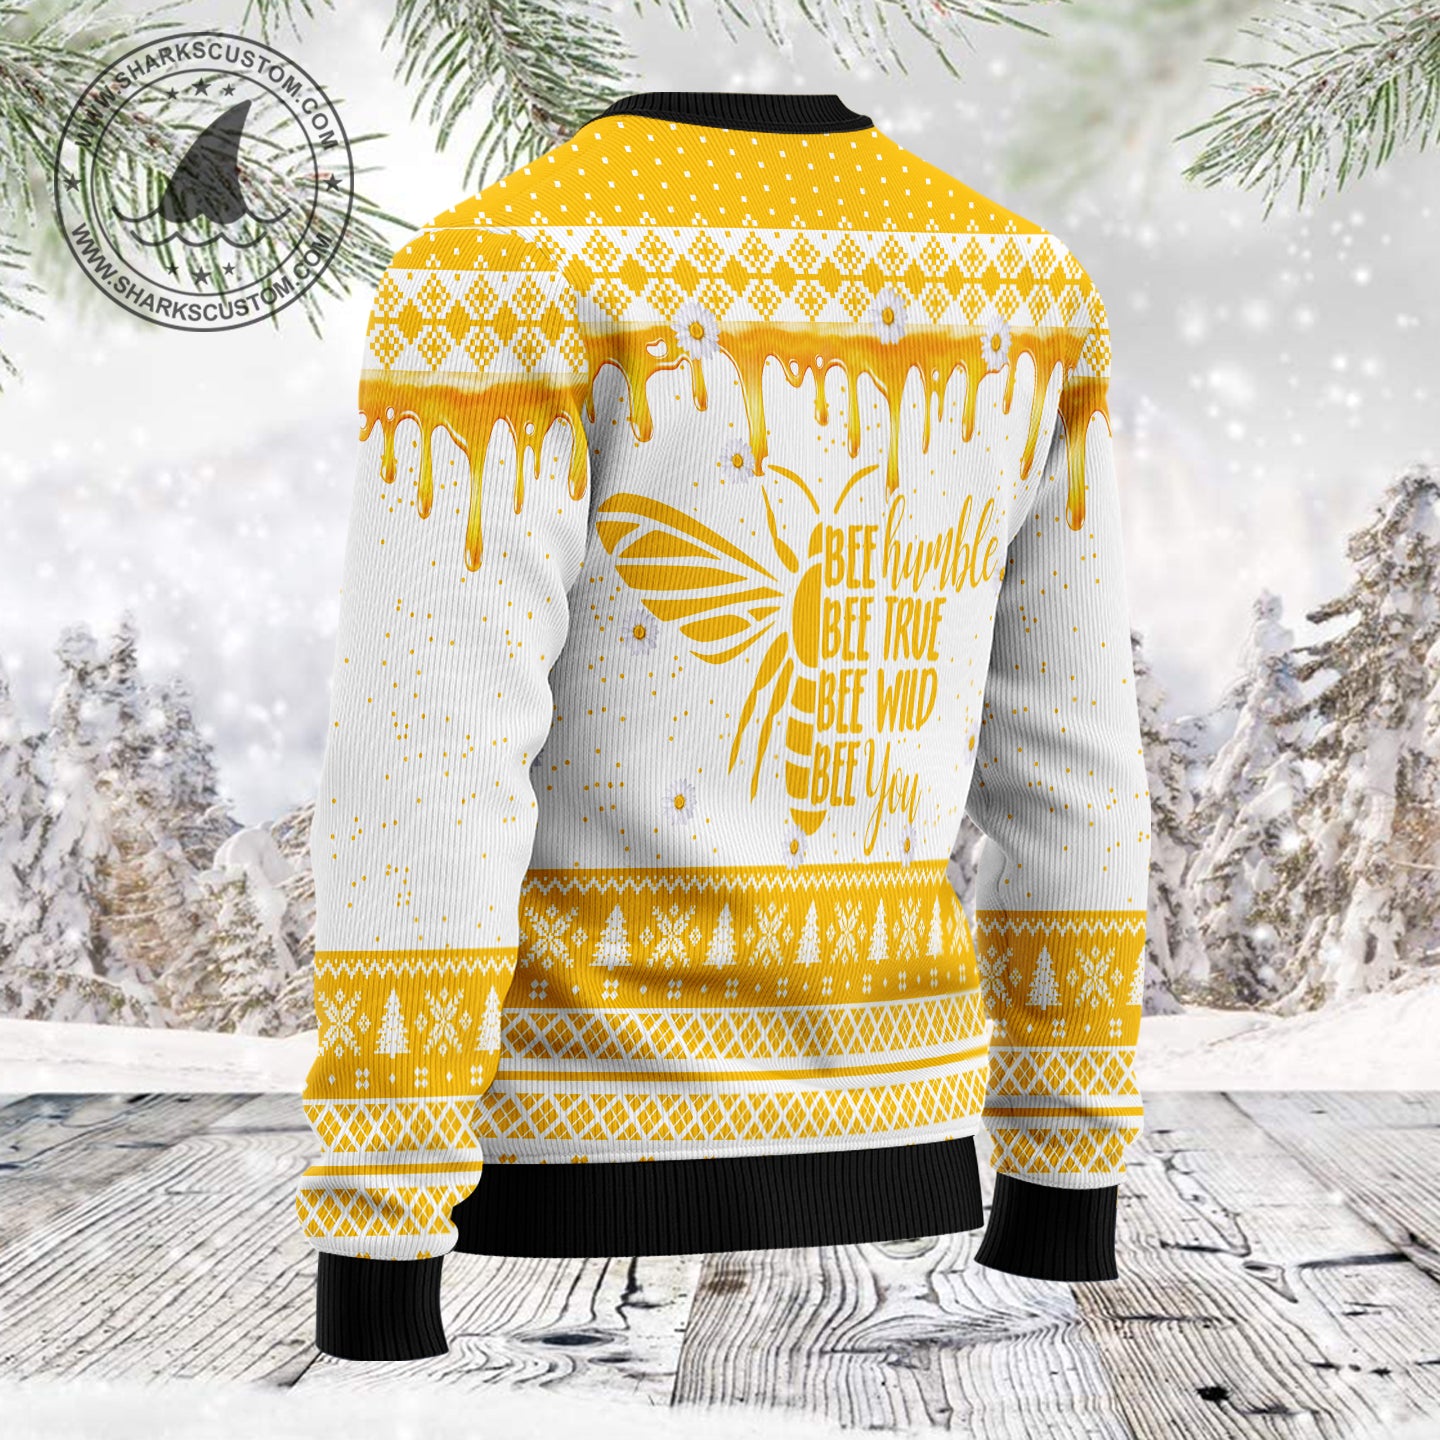 Bee Merry TG5121 Ugly Christmas Sweater